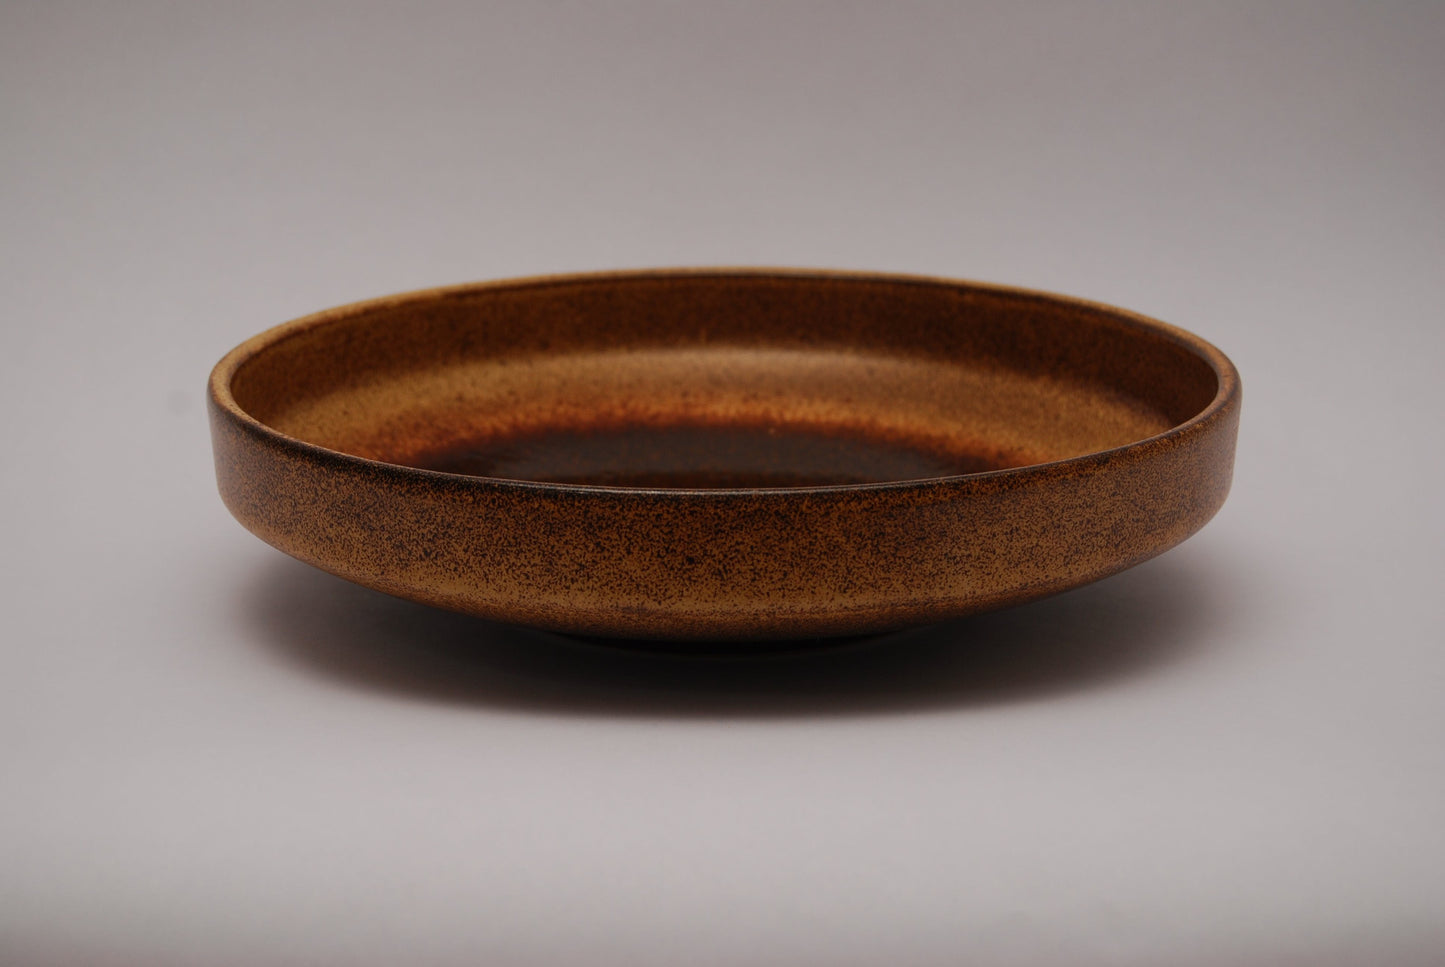 West German ceramic bowl